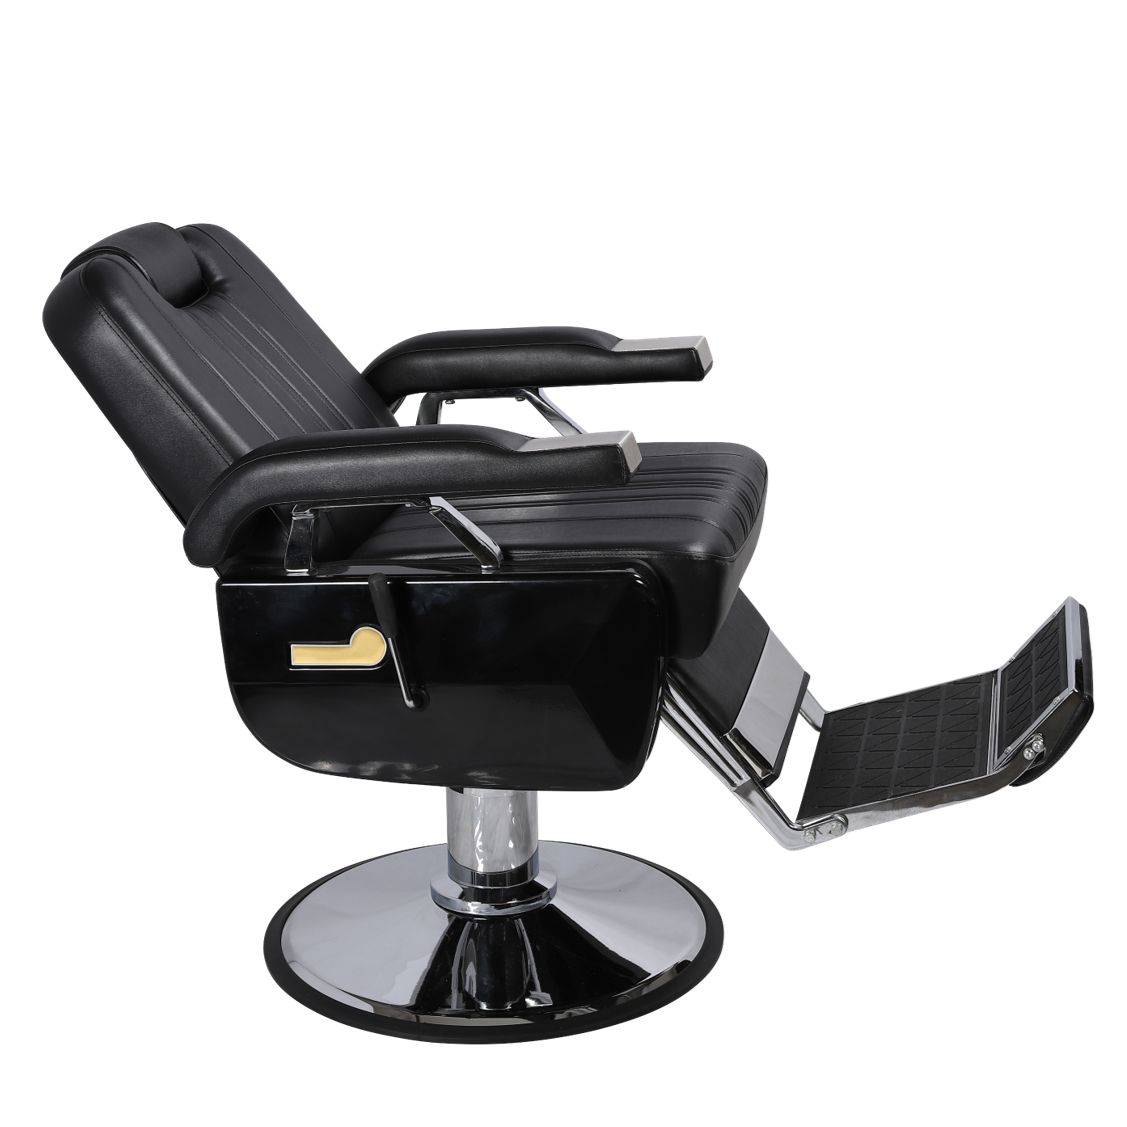 The Finley Barber Chair - Garfield Commercial Enterprises Salon Equipment Spa Furniture Barber Chair Luxury